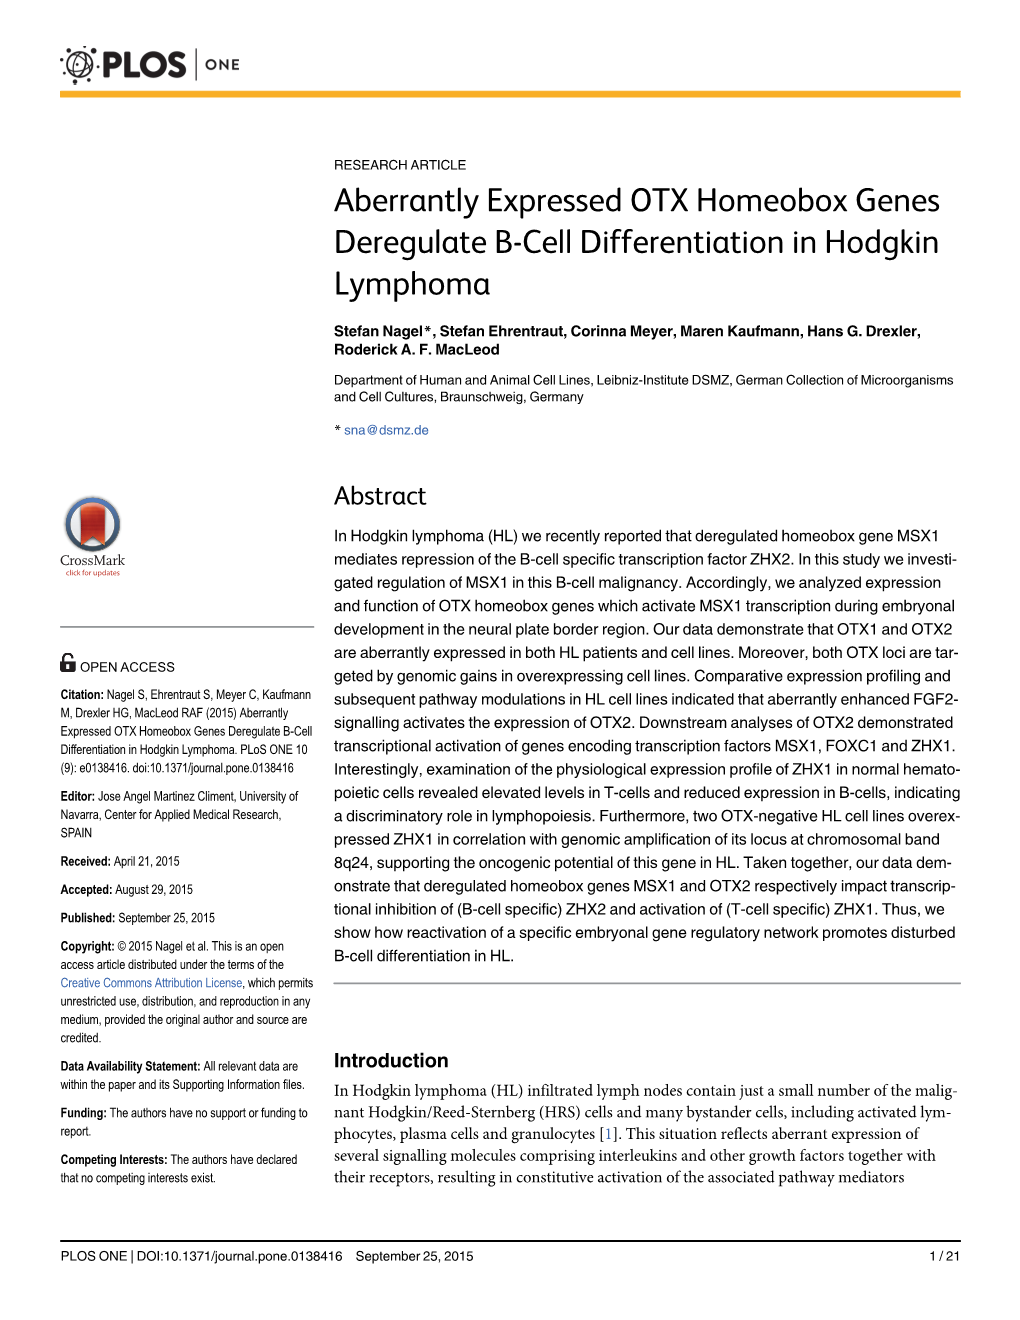 Aberrantly Expressed OTX Homeobox Genes Deregulate B-Cell Differentiation in Hodgkin Lymphoma